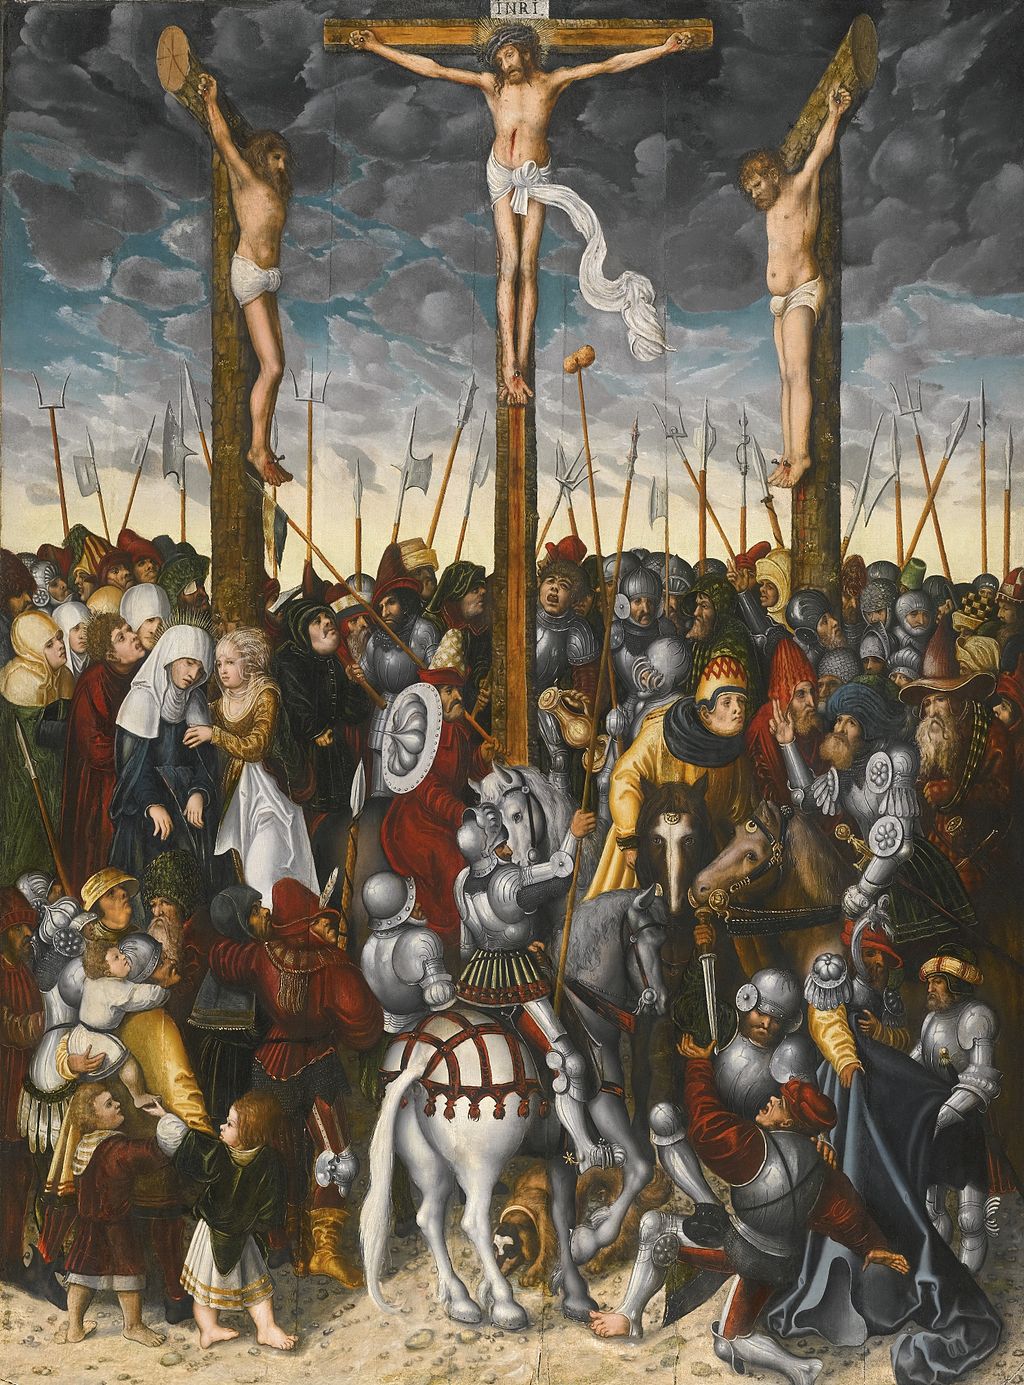 Lucas Cranach der Jüngere, Kreuzigung (nach 1535), [Public domain] via wikicommons